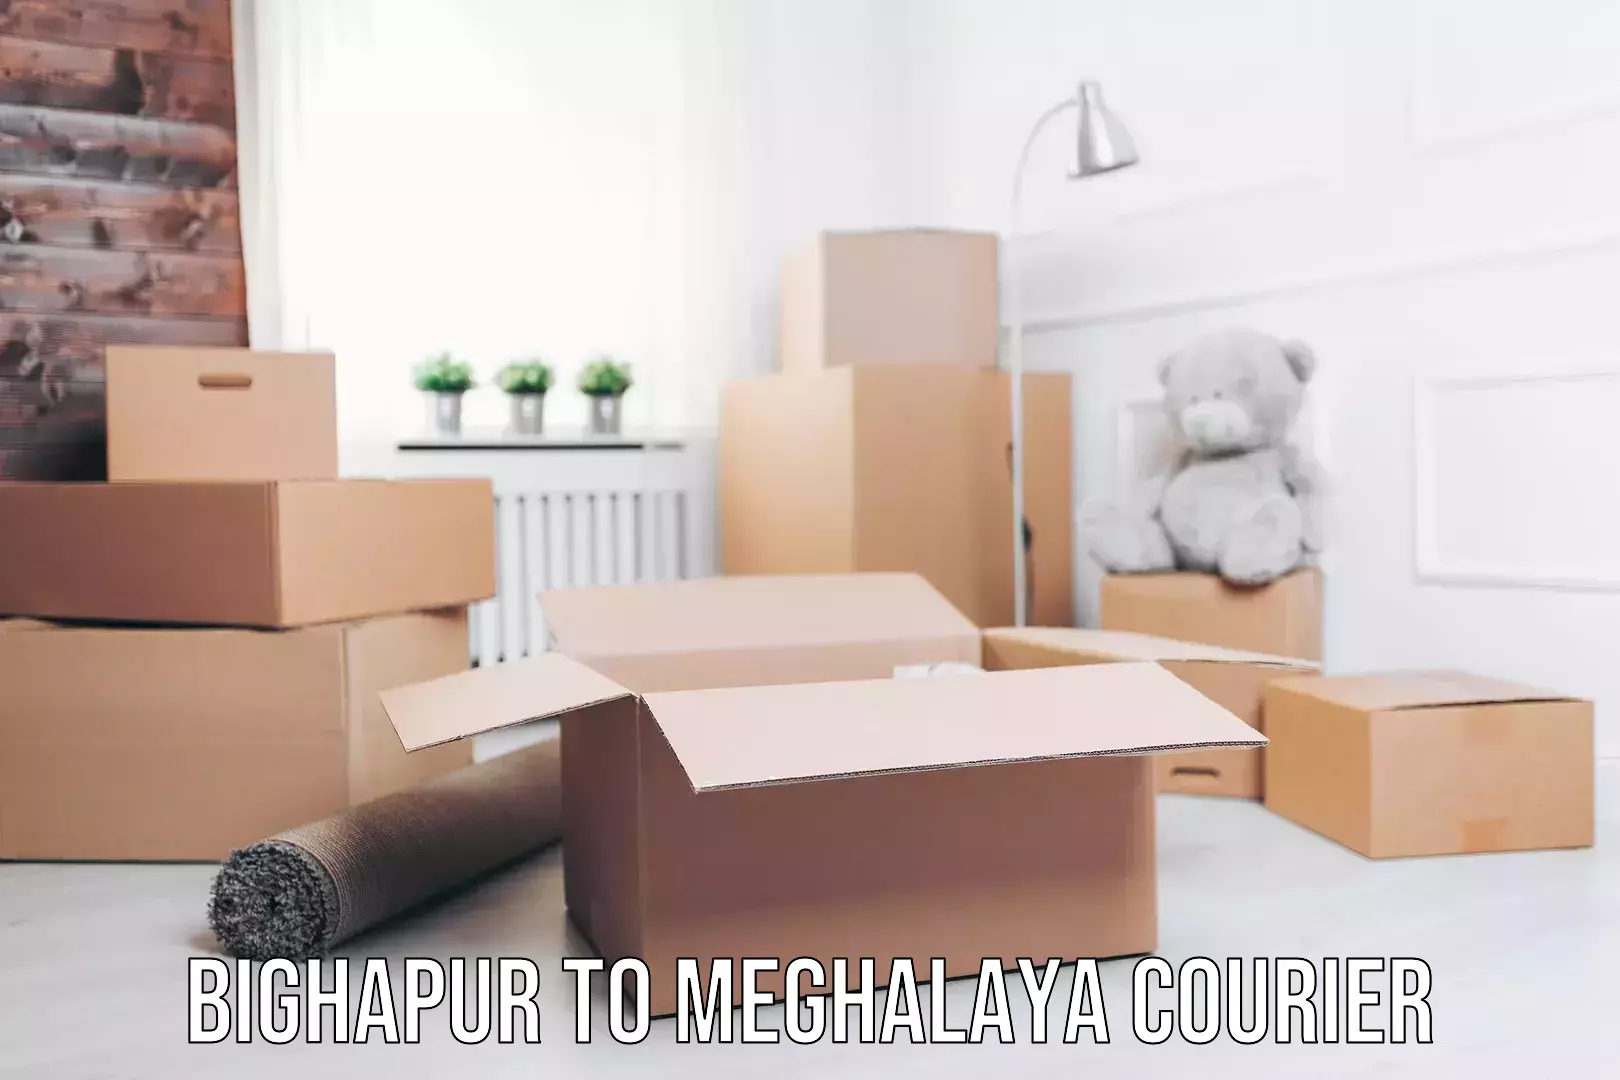 Next day courier Bighapur to Meghalaya